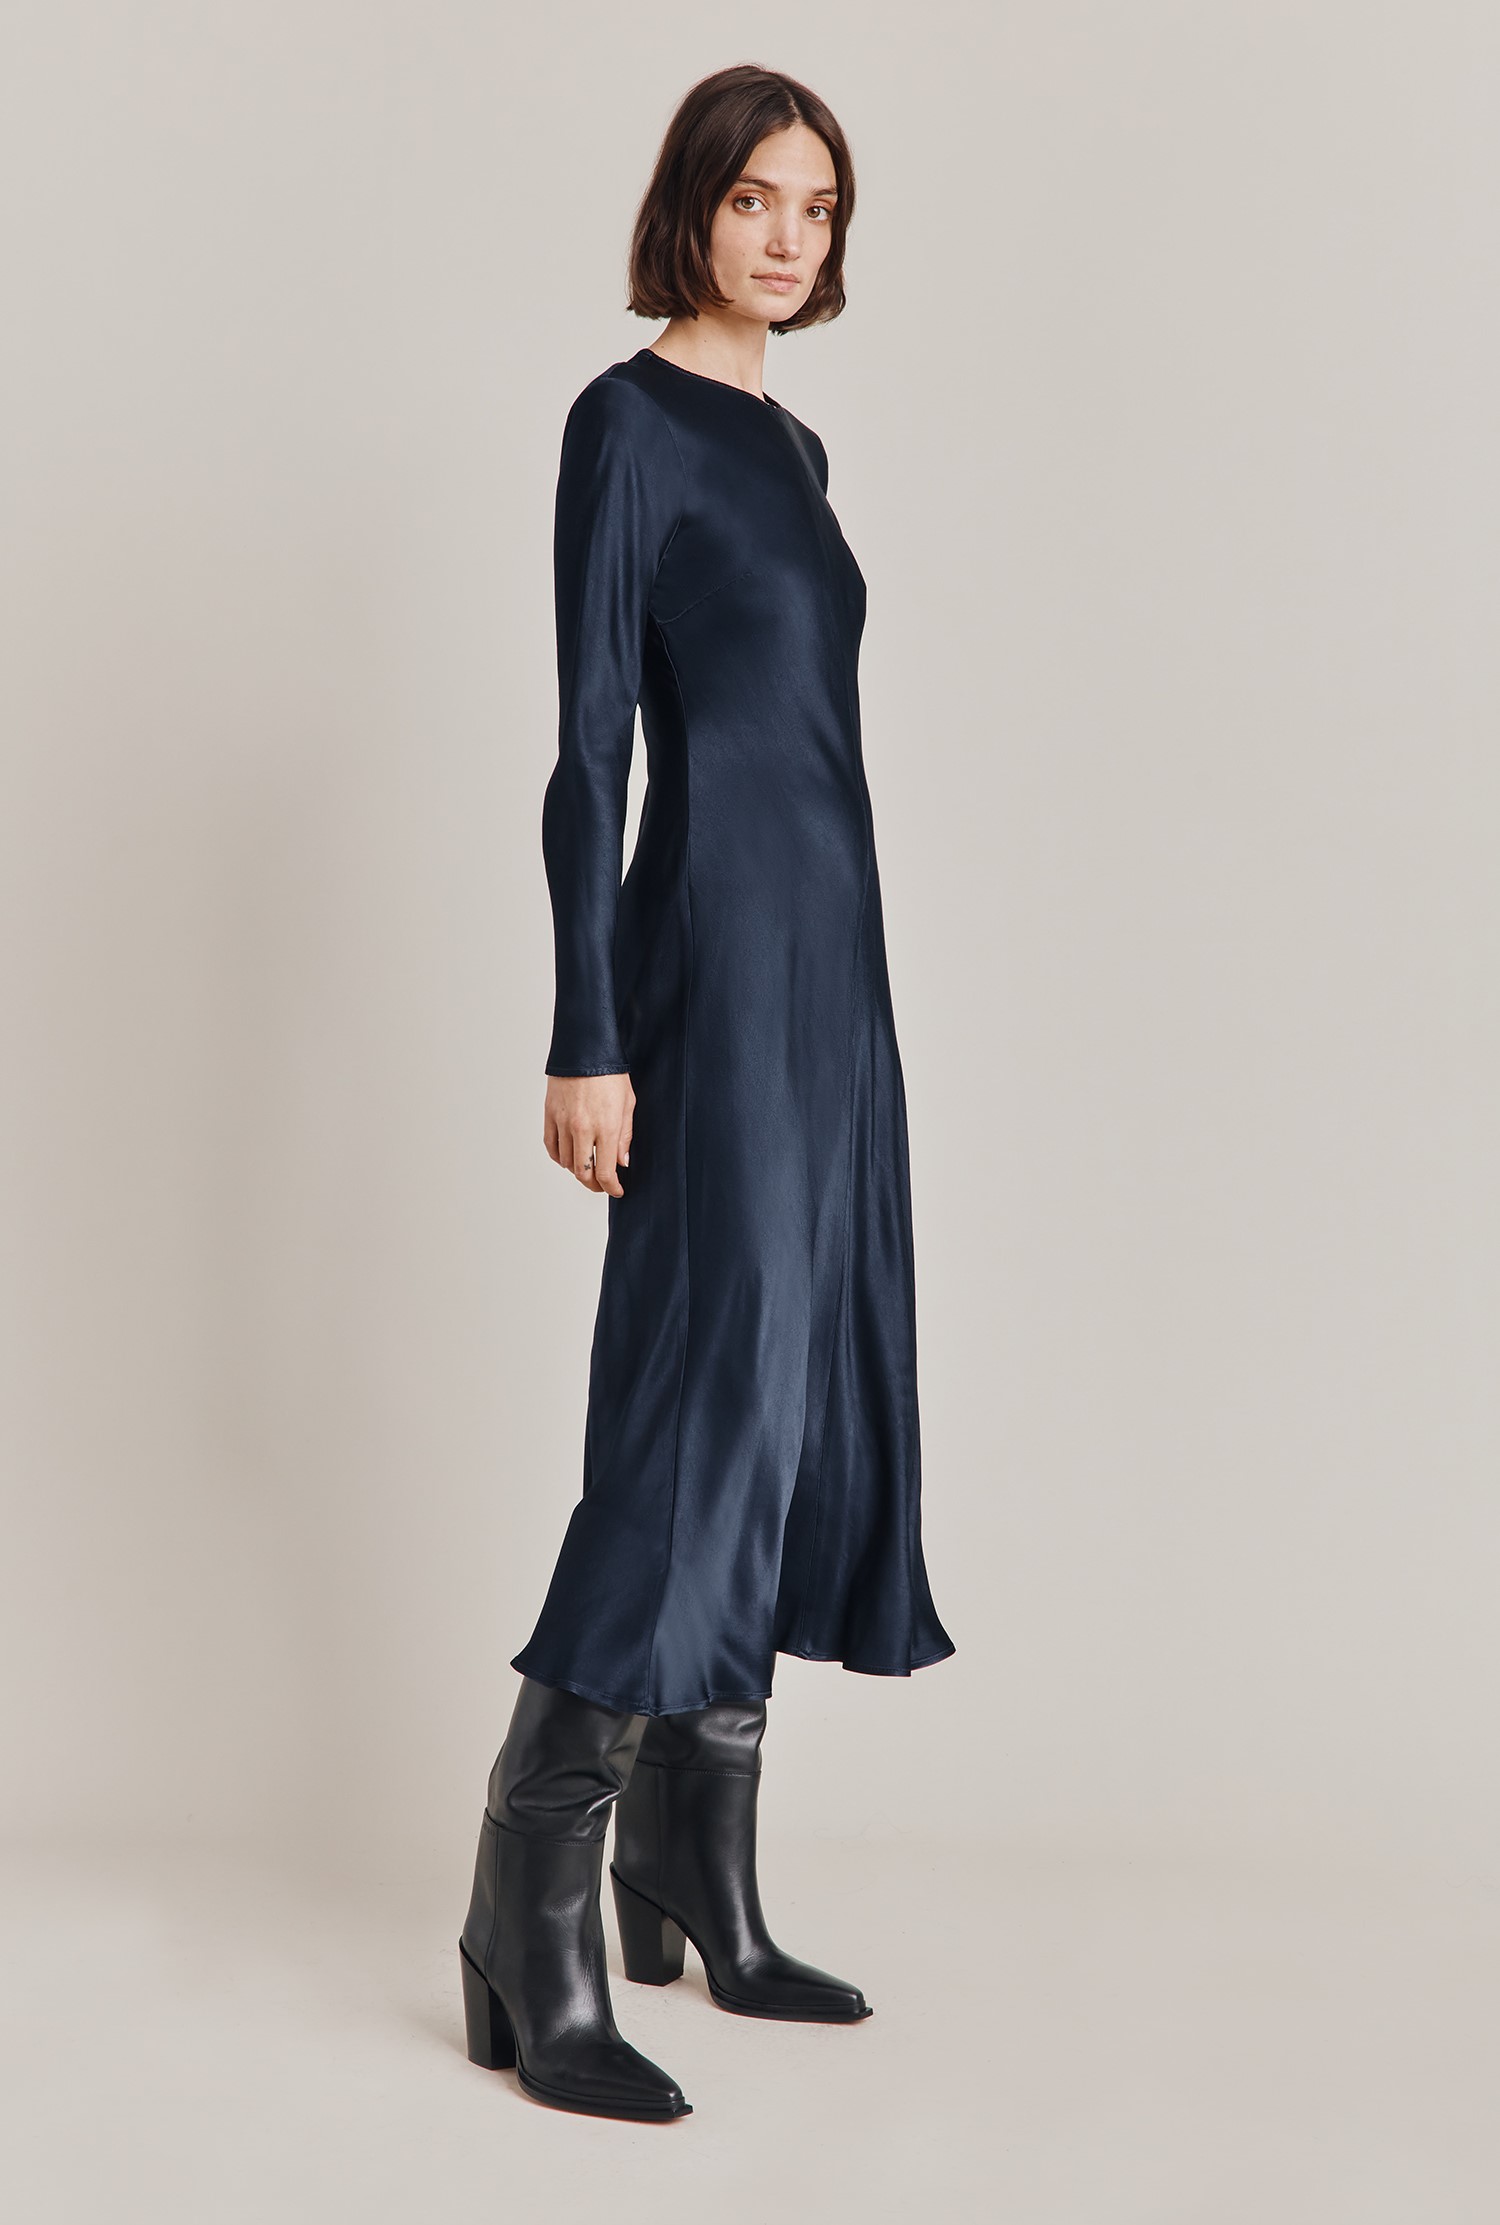 Mari Navy Satin Midi Dress | Ghost London